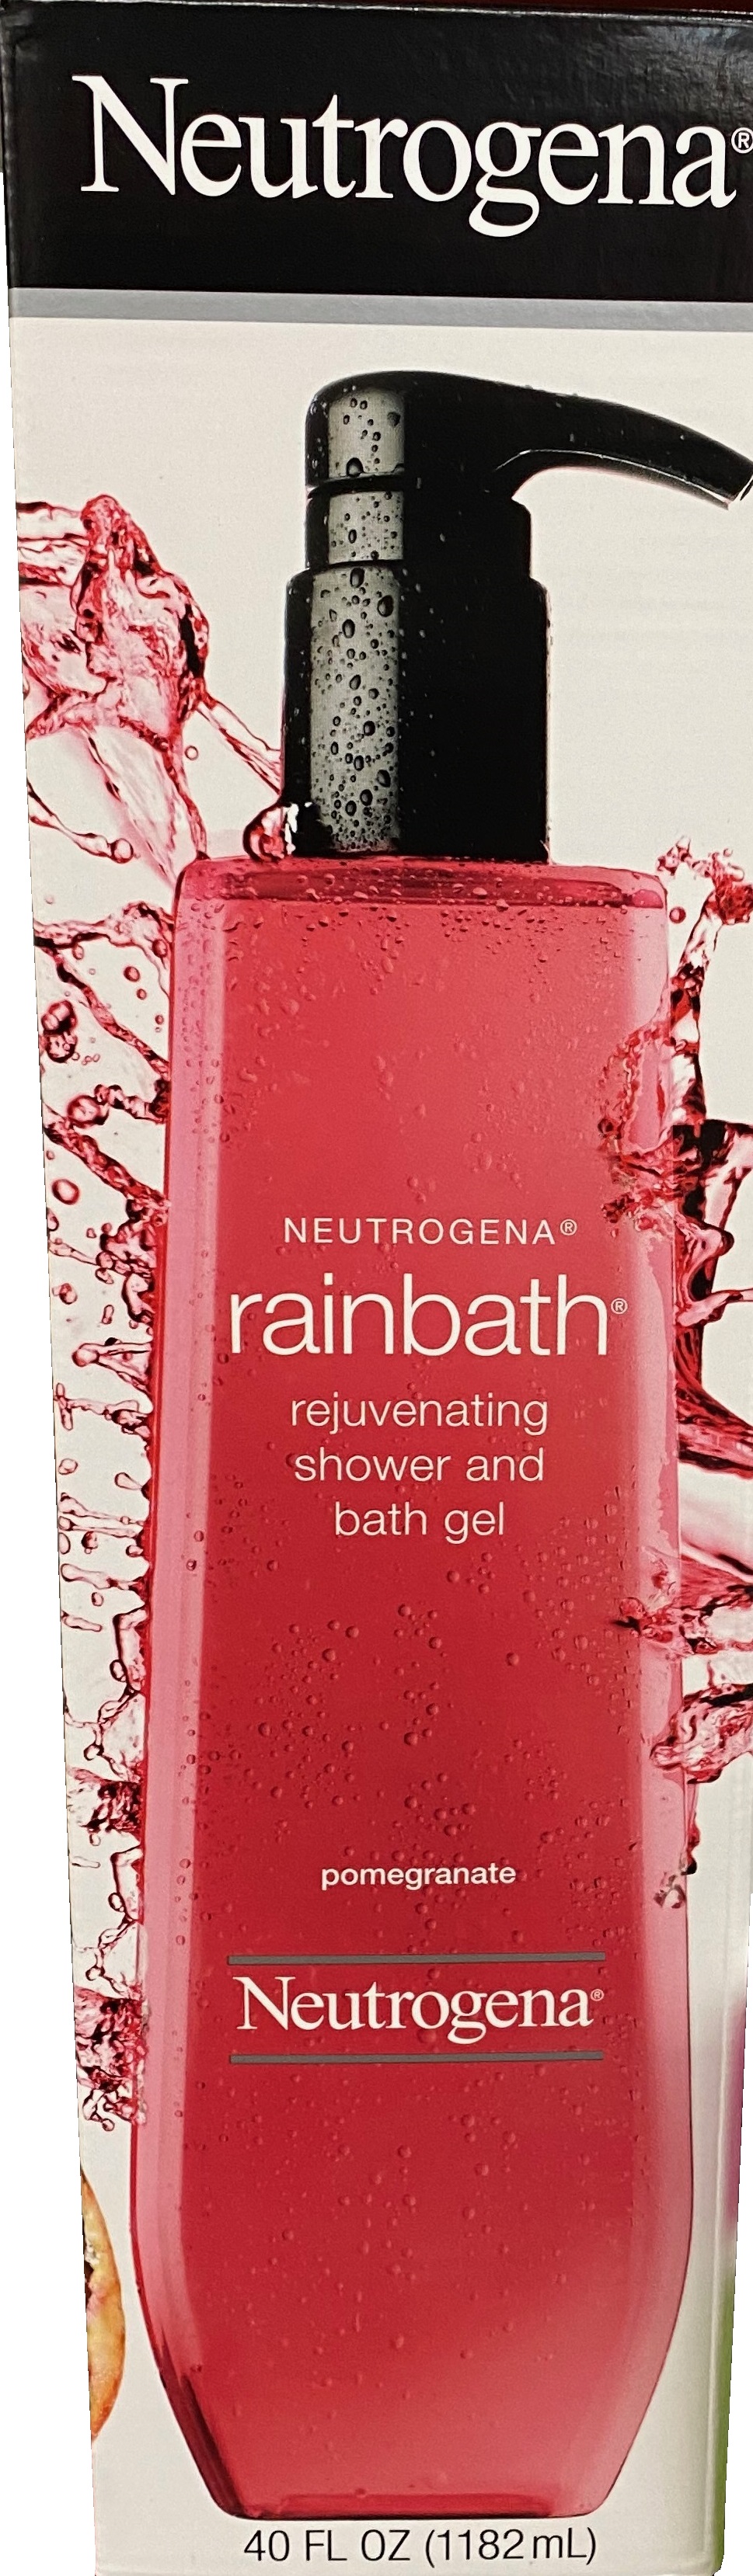 Neutrogena Rainbath Refreshing Shower and Bath Gel, Pomegranate Scent, 40 Fl Oz